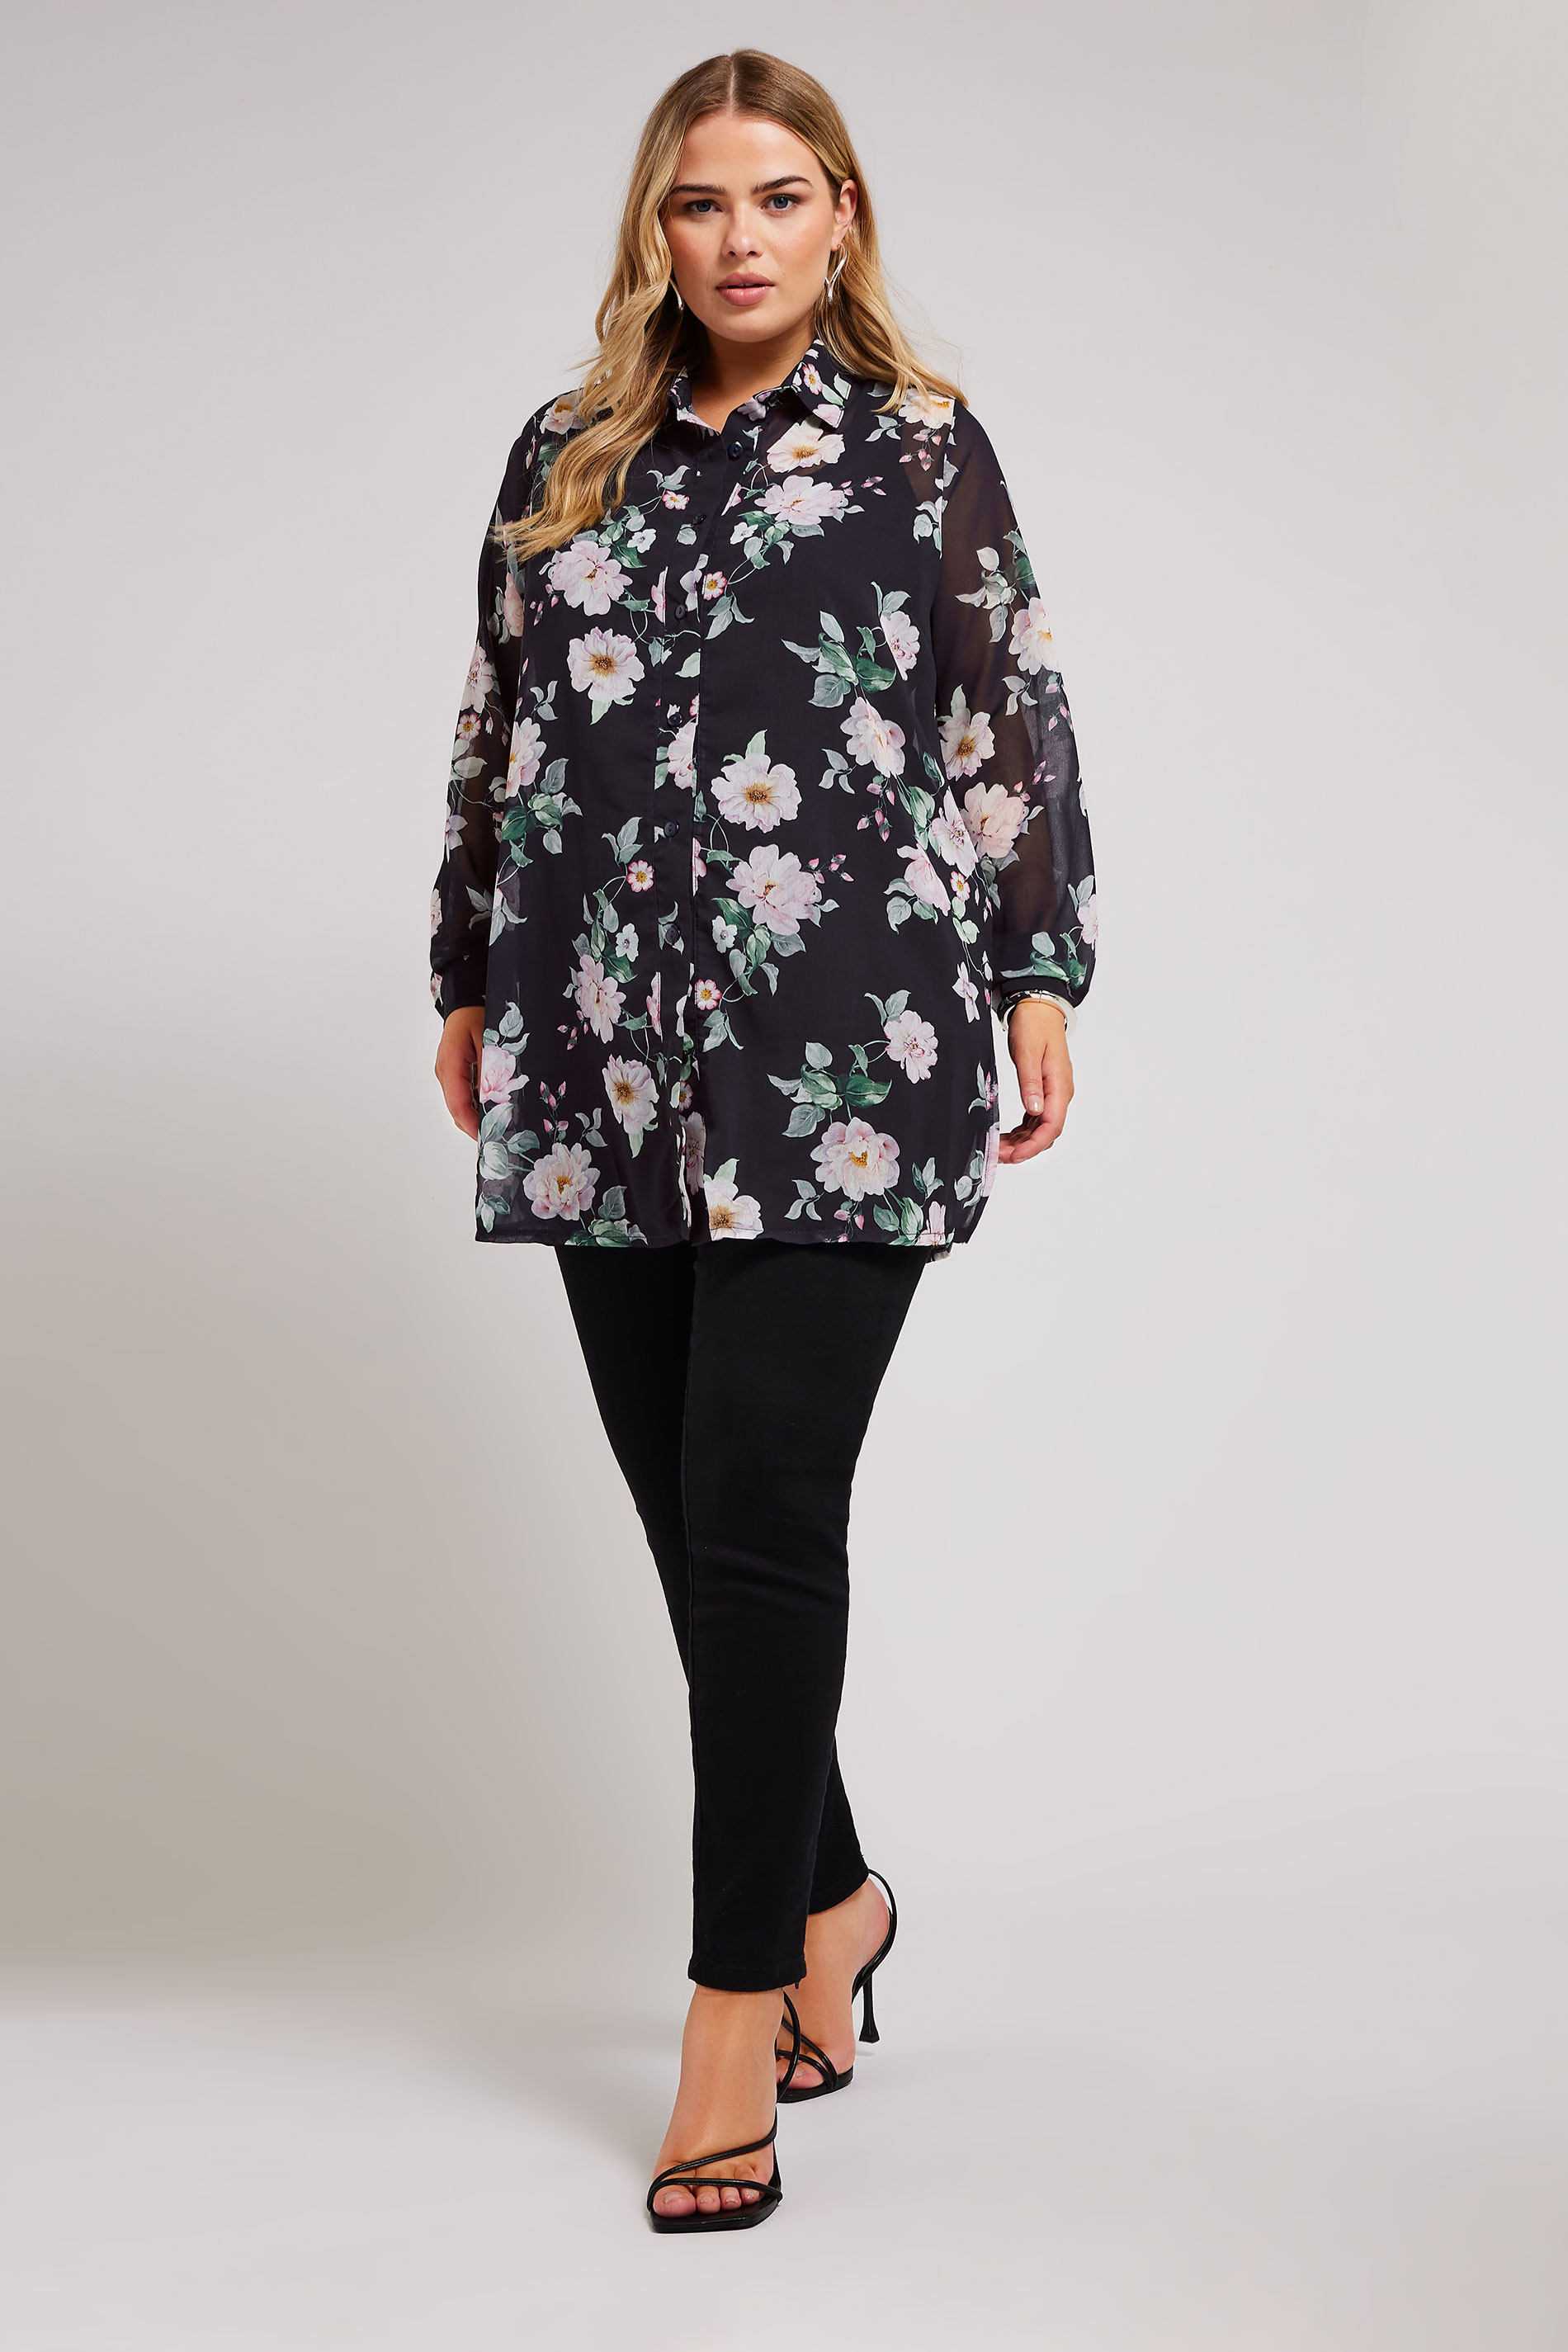 YOURS LONDON Plus Size Black Floral Mesh Longline Shirt | Yours Clothing 2